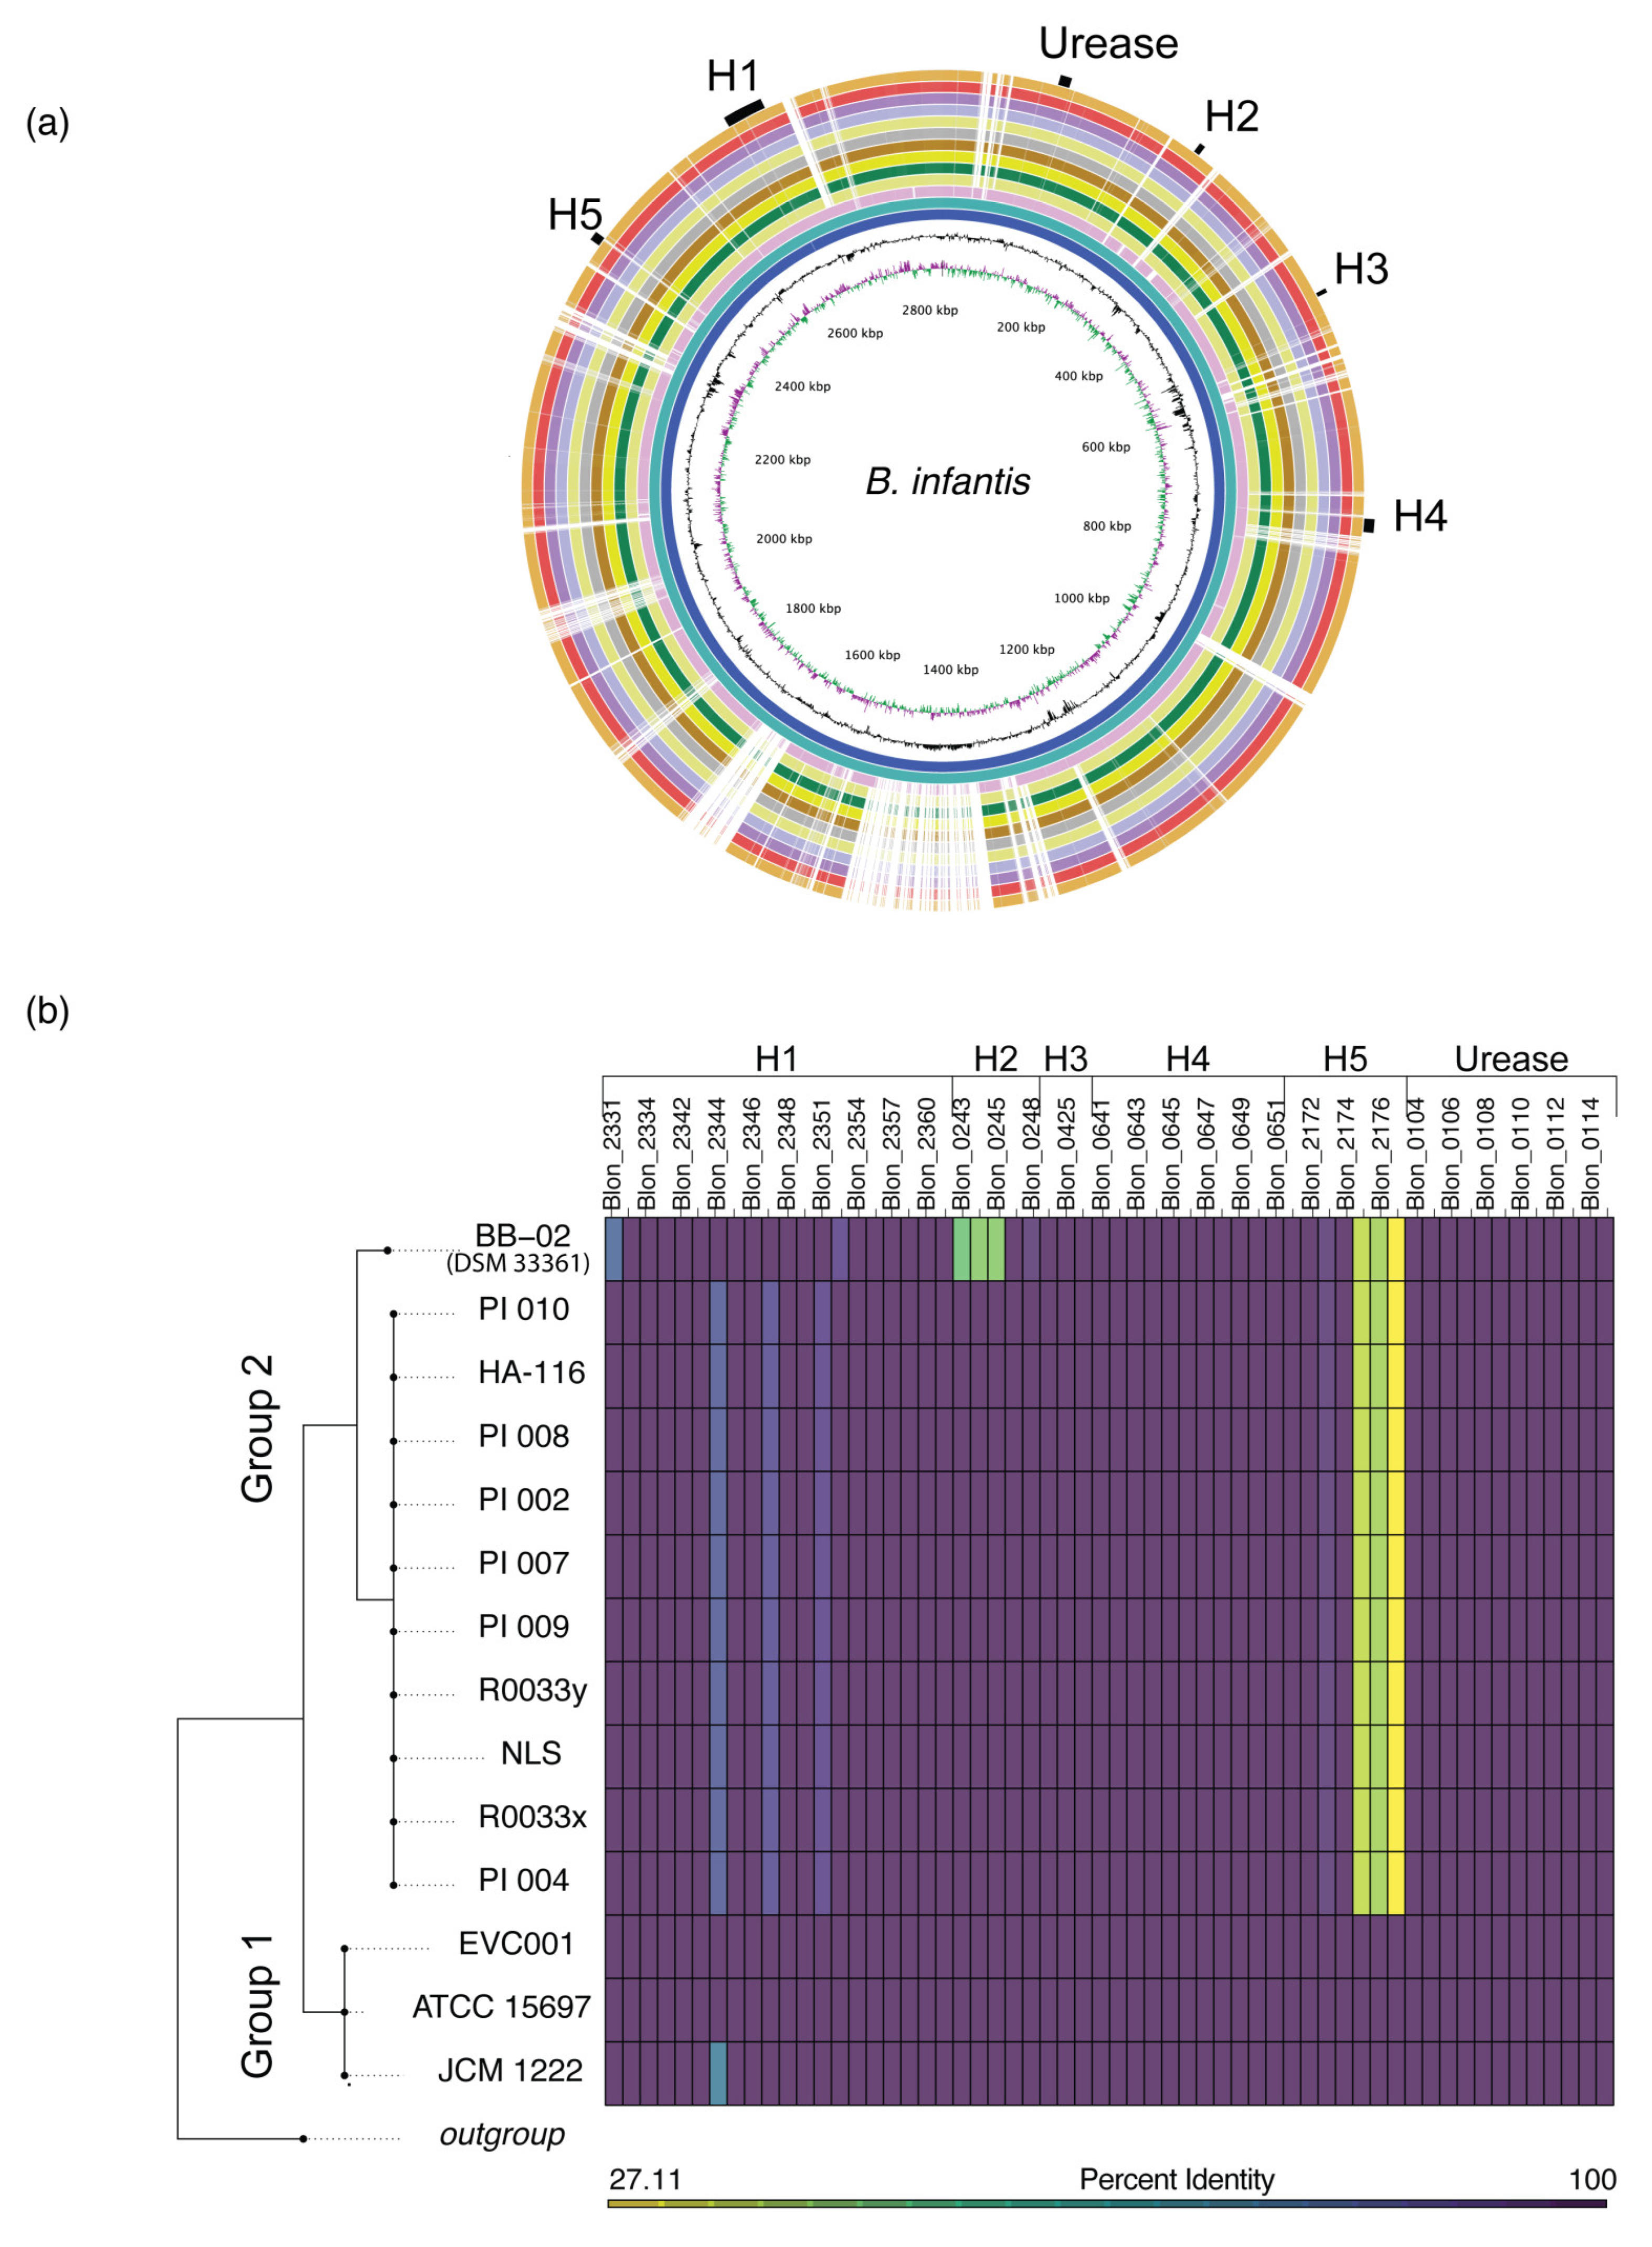 Nutrients | Free Full-Text | Comparative Genome Analysis of Bifidobacterium  longum subsp. infantis Strains Reveals Variation in Human Milk  Oligosaccharide Utilization Genes among Commercial Probiotics | HTML